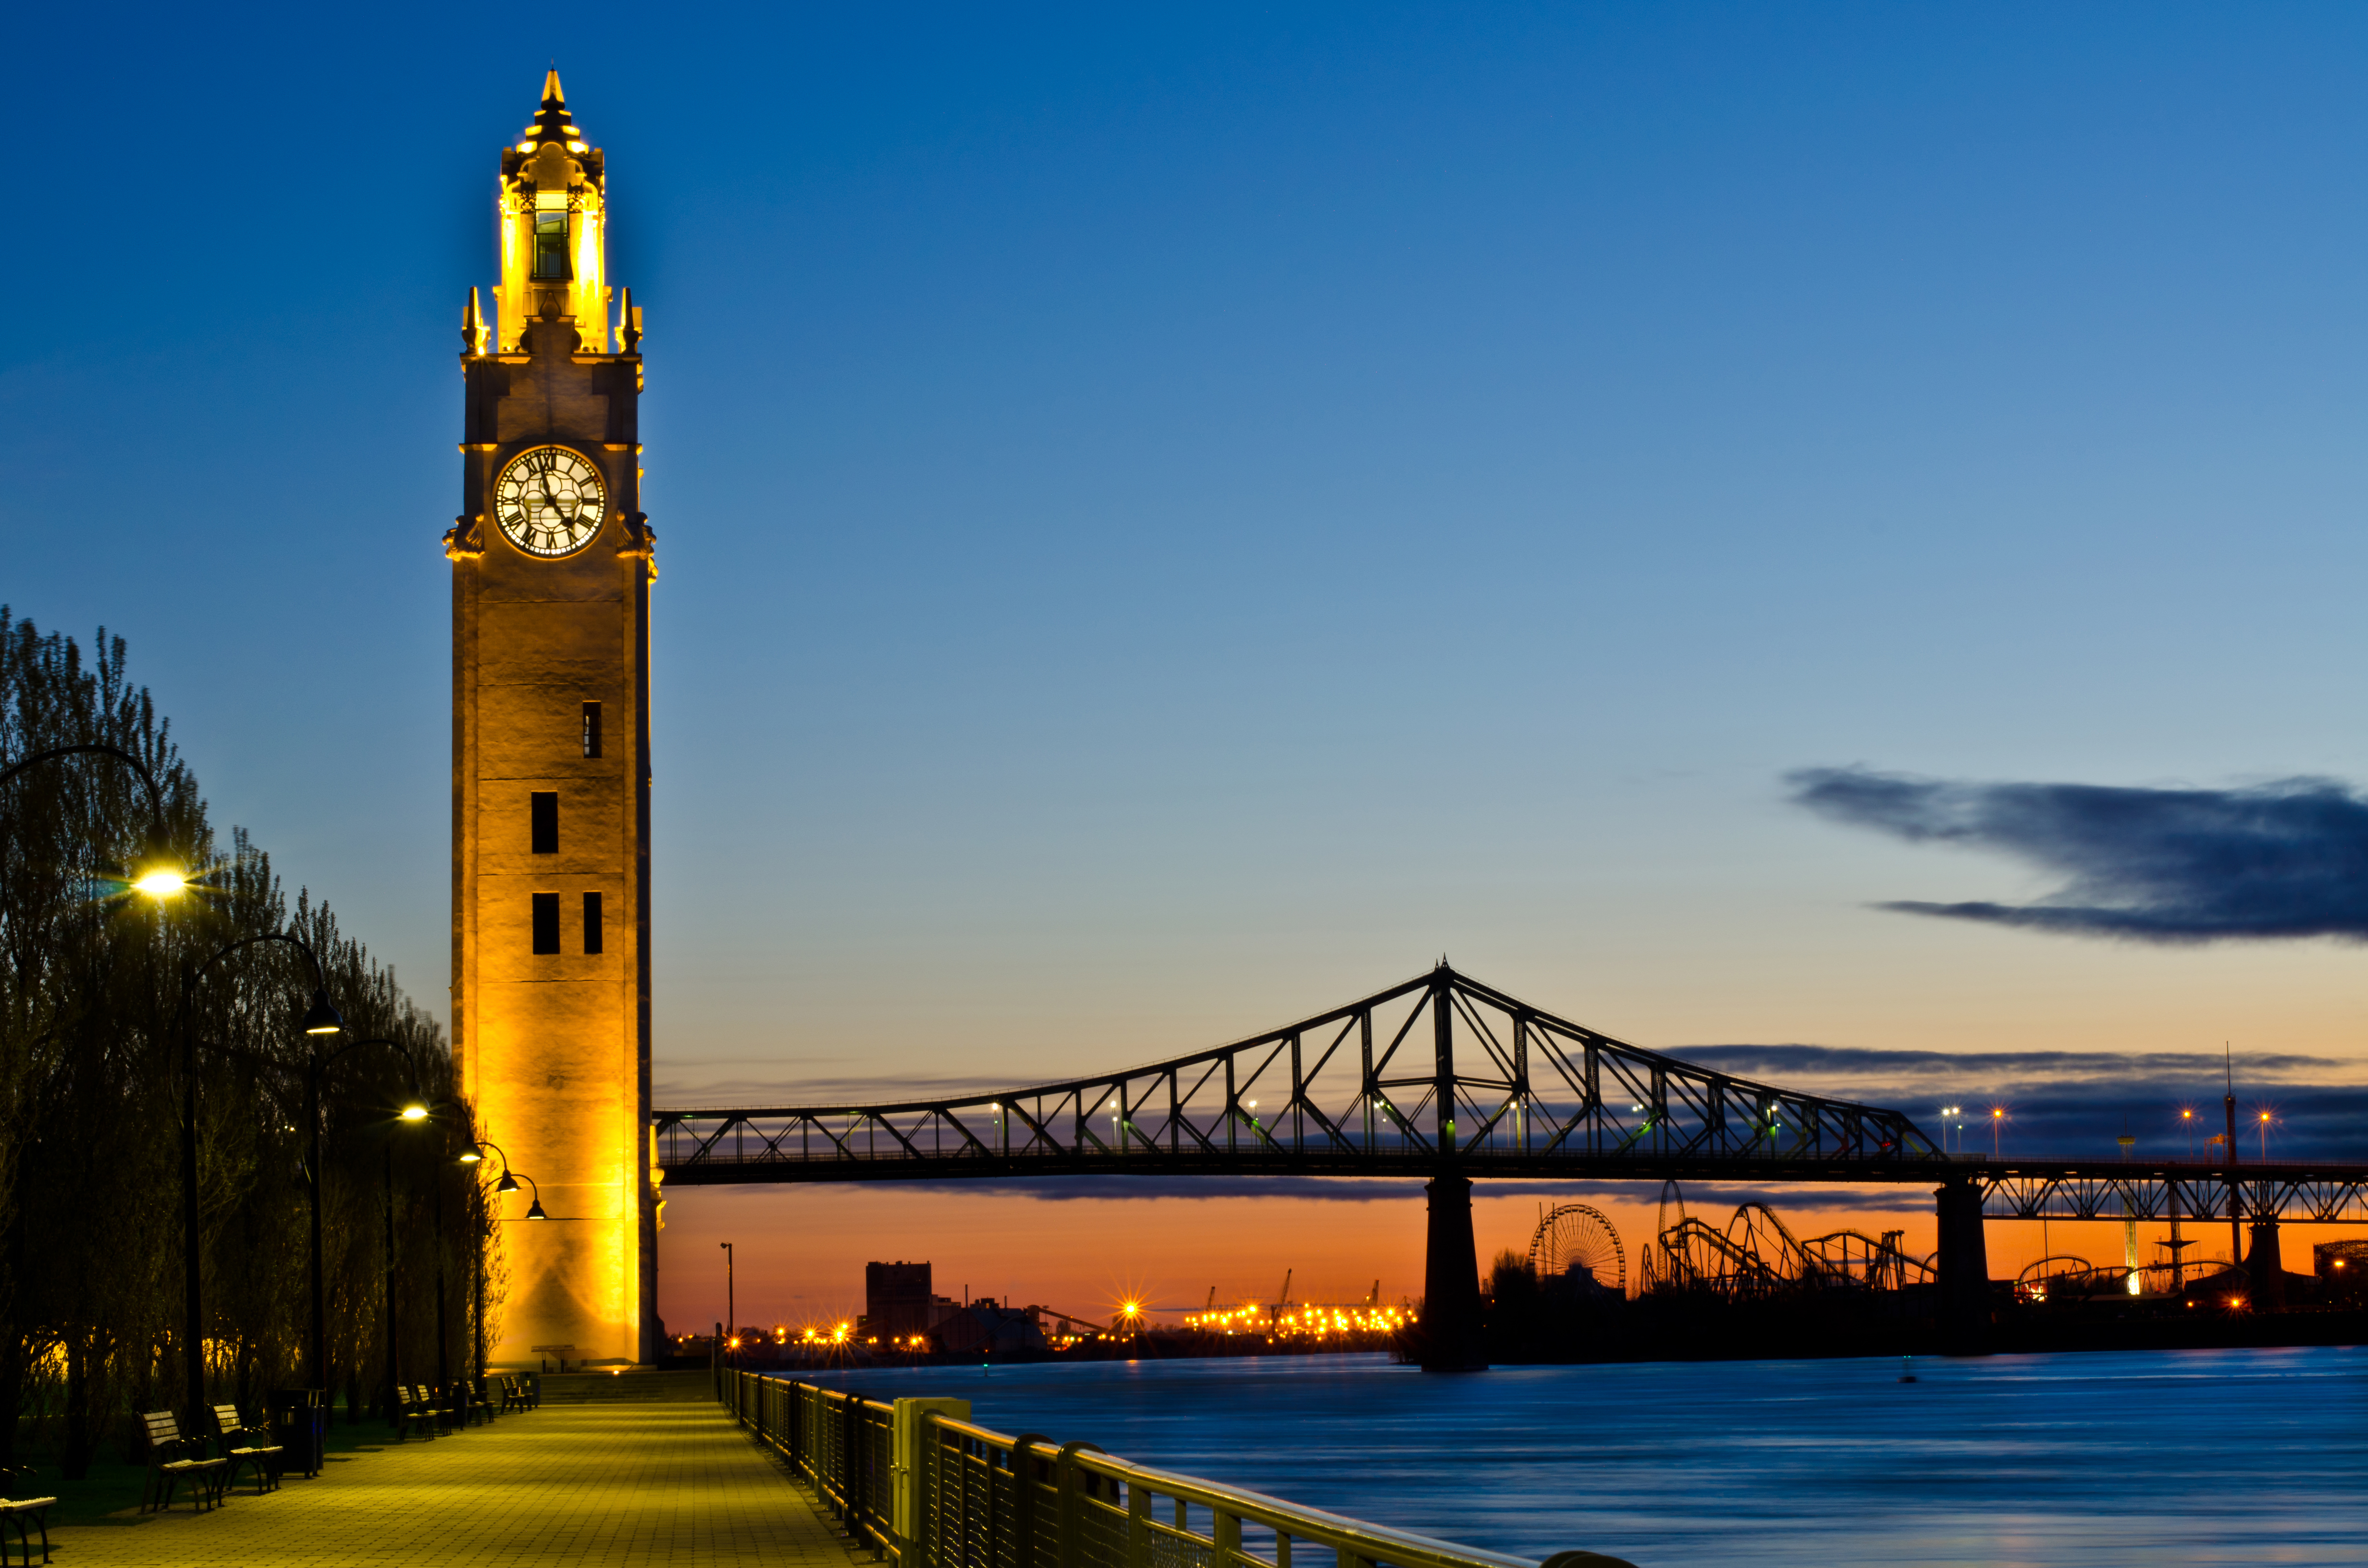 The Montréal Clock Tower at sunrise